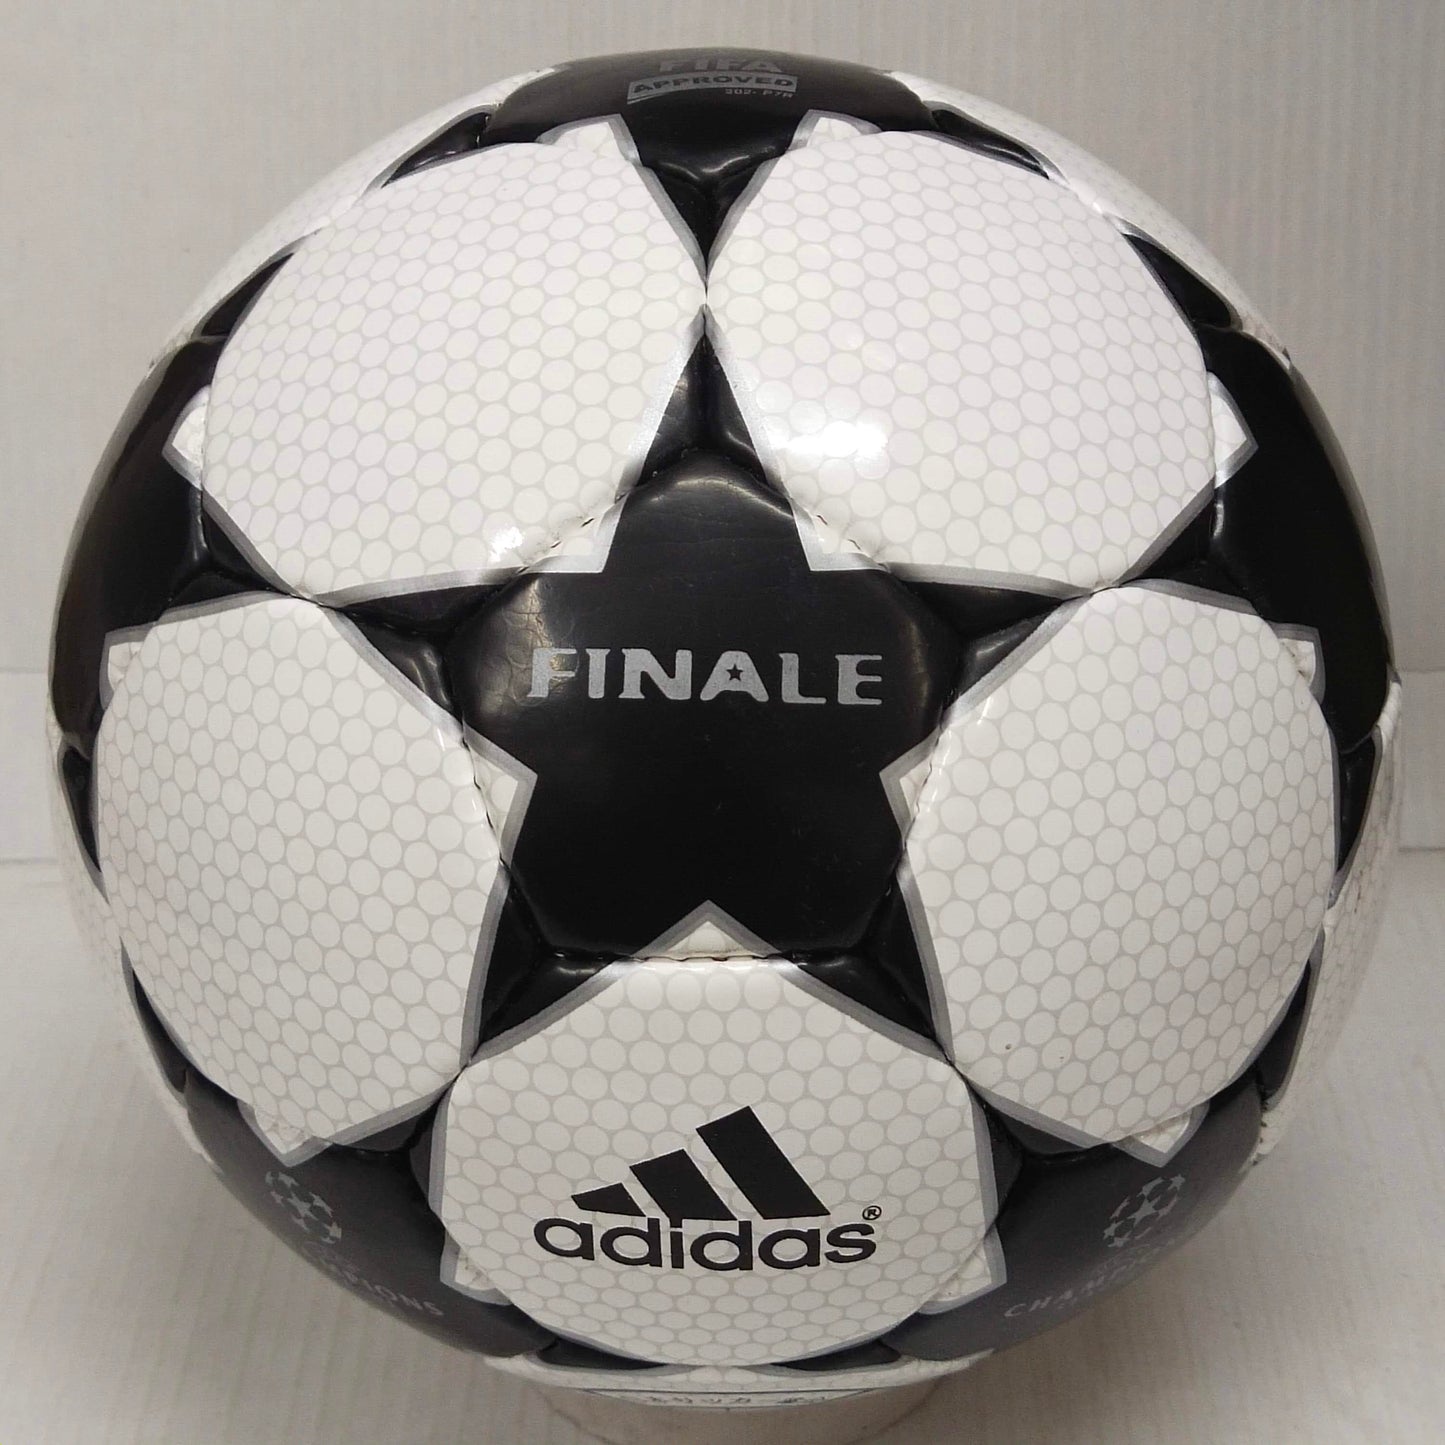 Adidas Finale JFA | 2002 | Japanese Football Association | Size 5 02